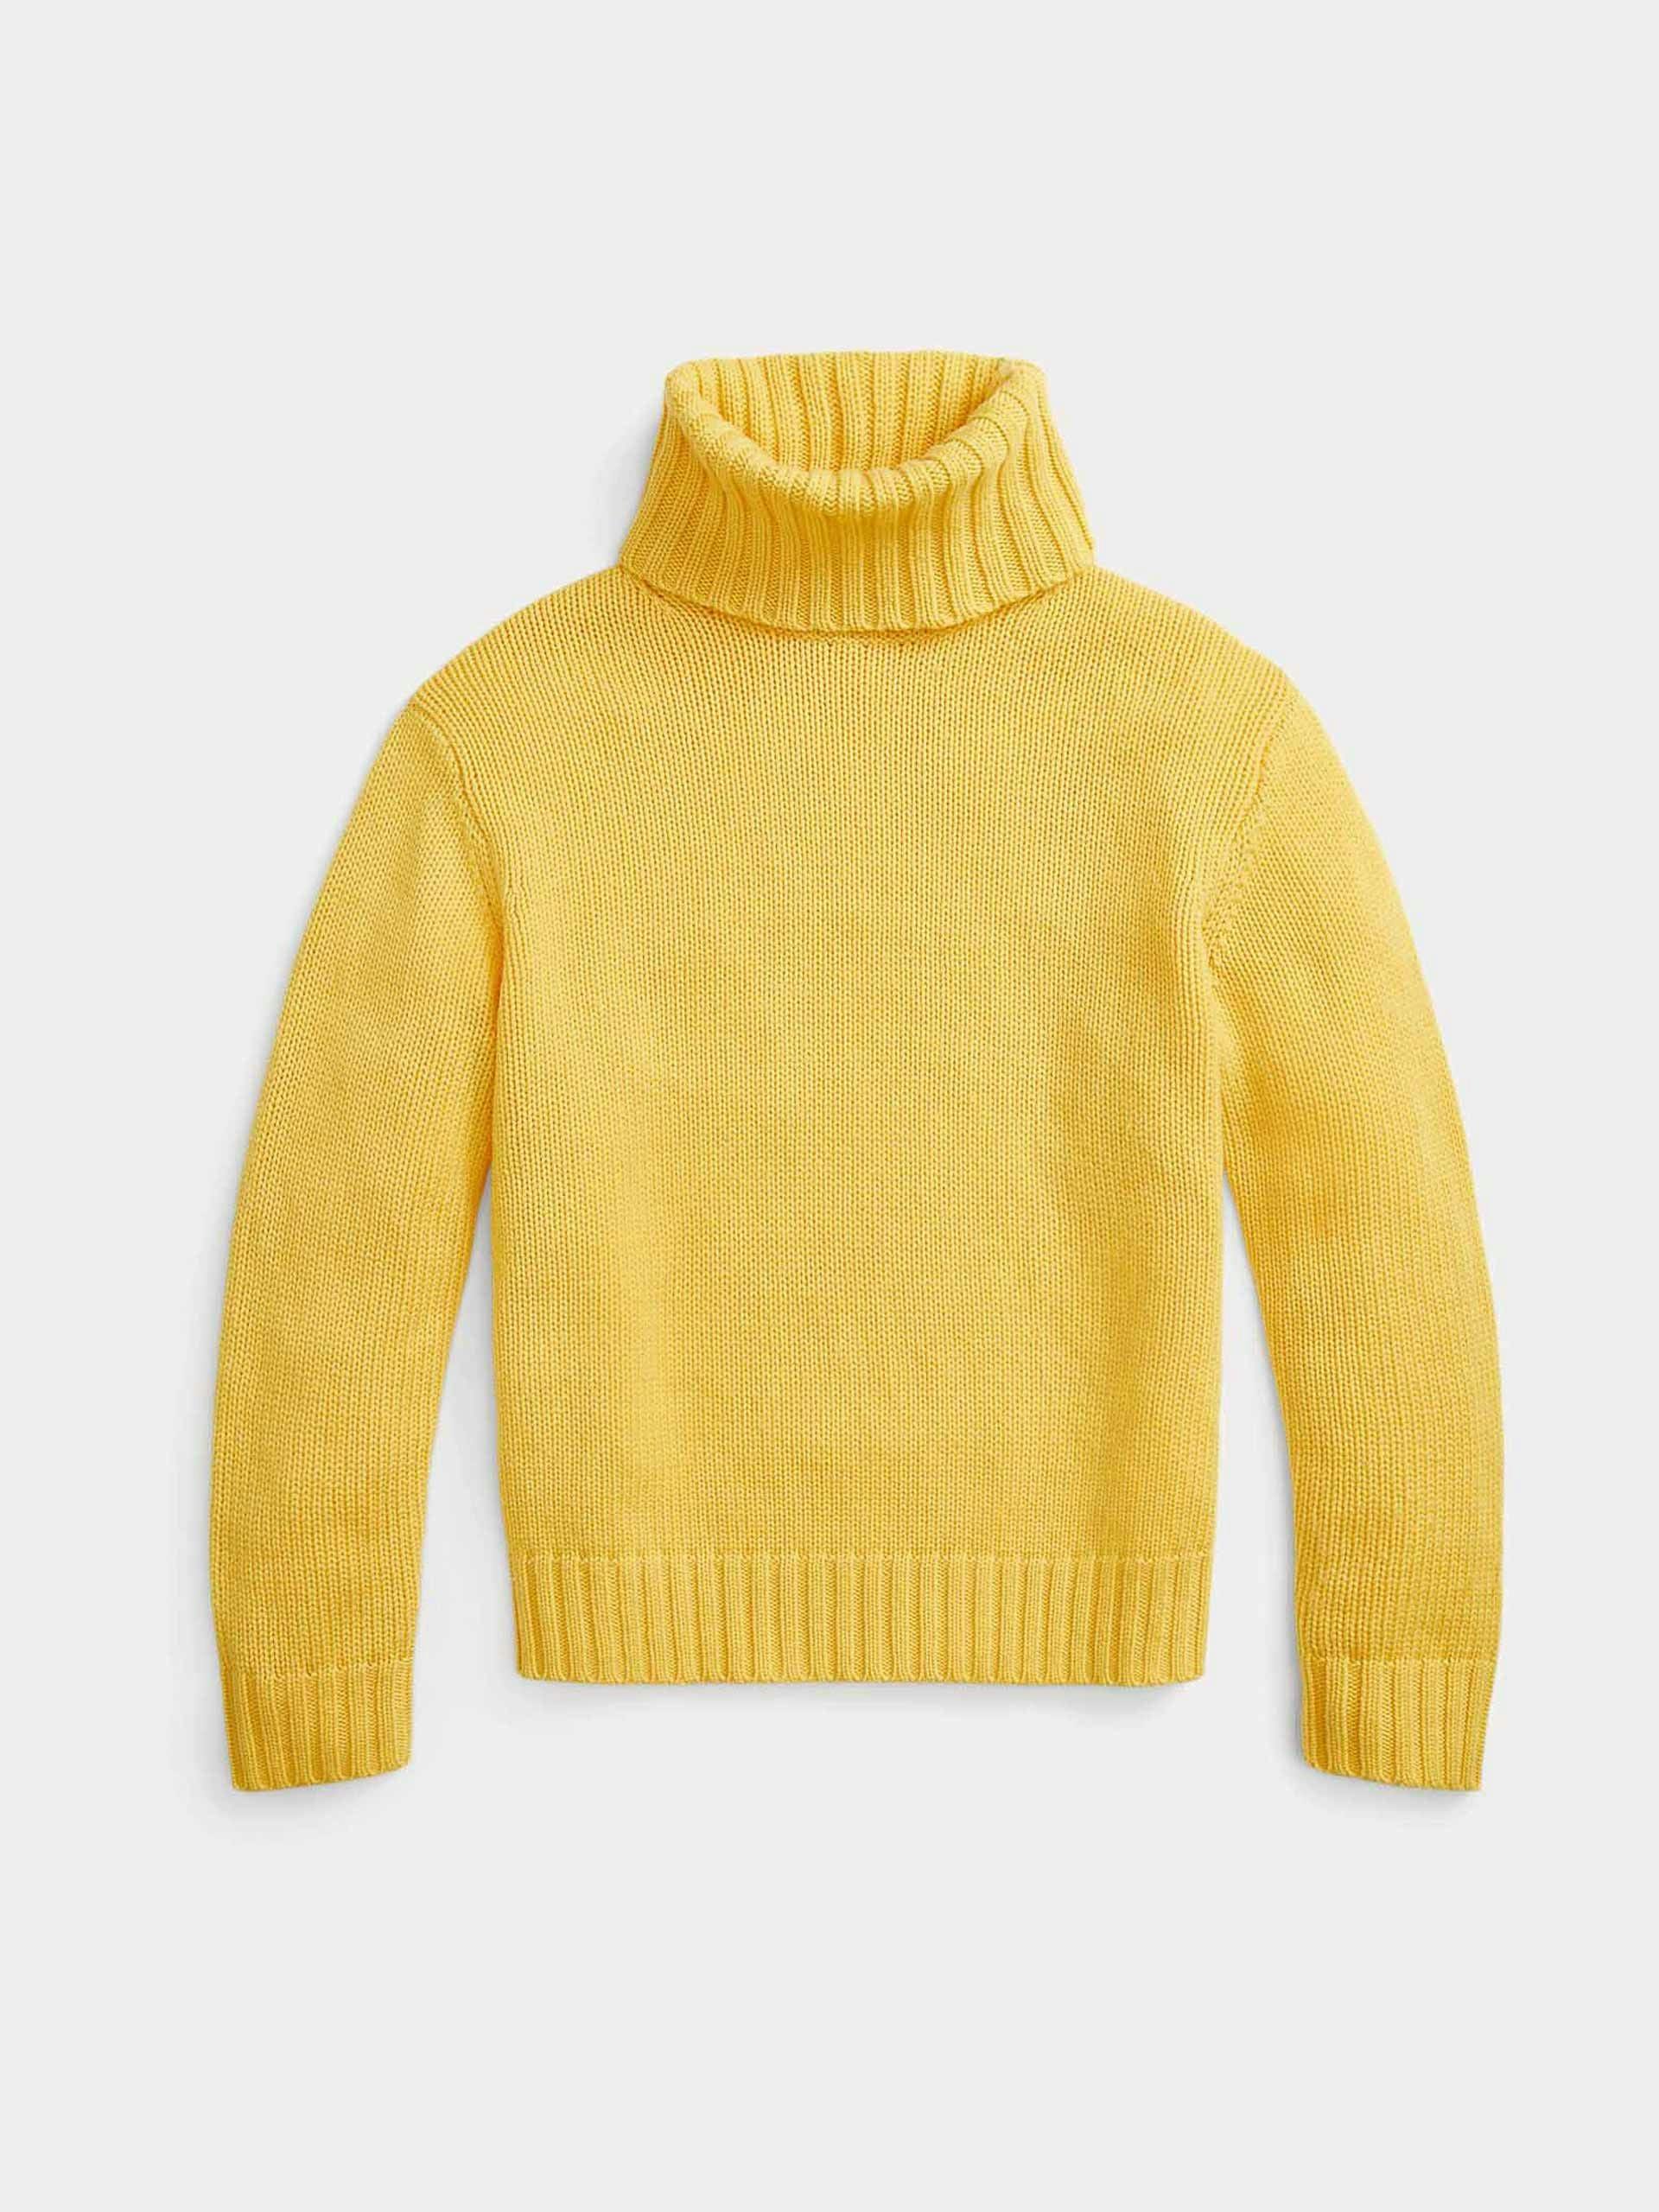 Wool Turtleneck jumper